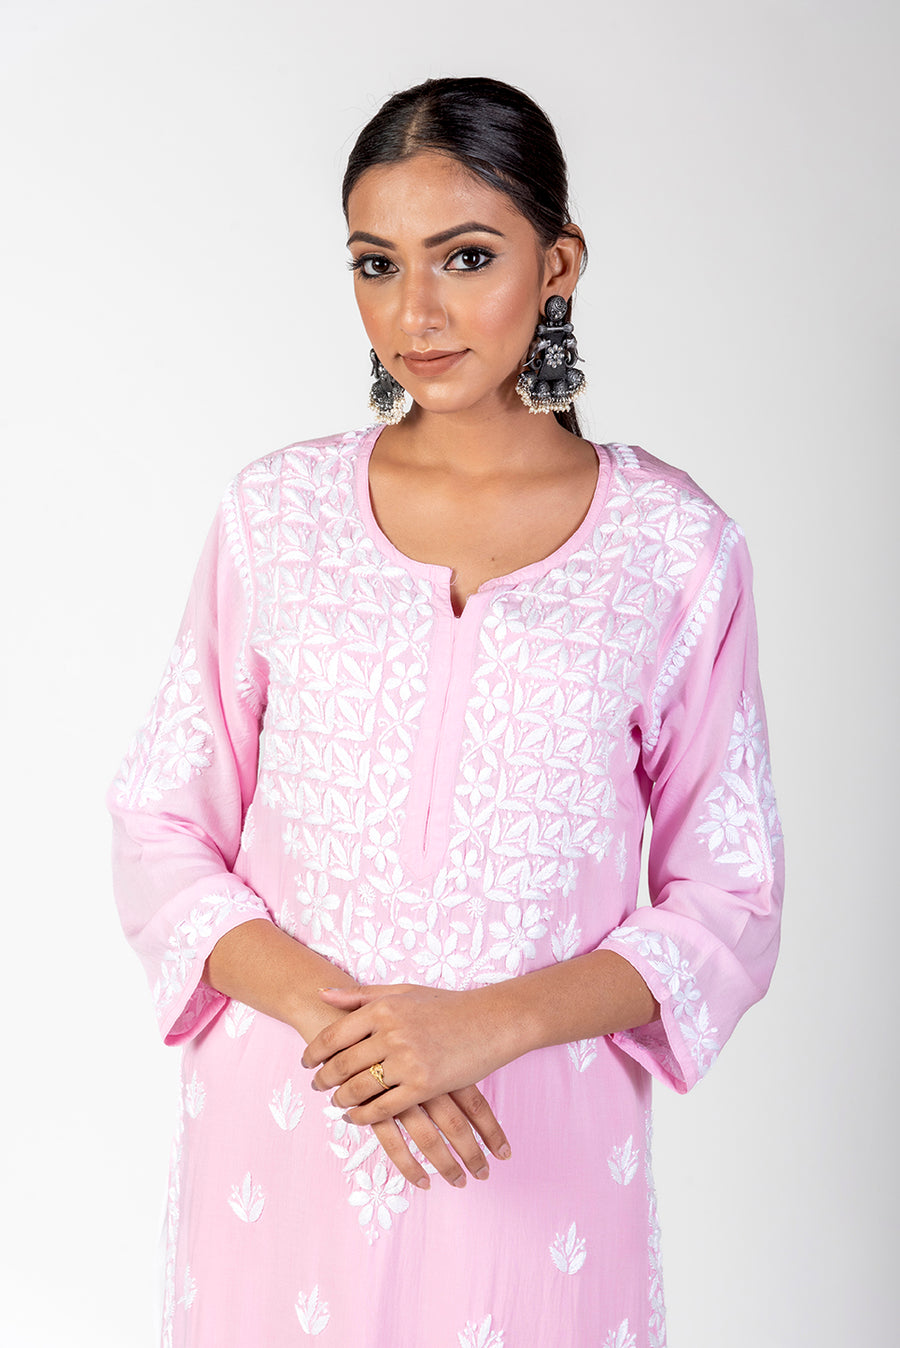 Super Soft Fine Modal  Chikankari Kurti Pink Colour Lucknow Chikan Emporium..